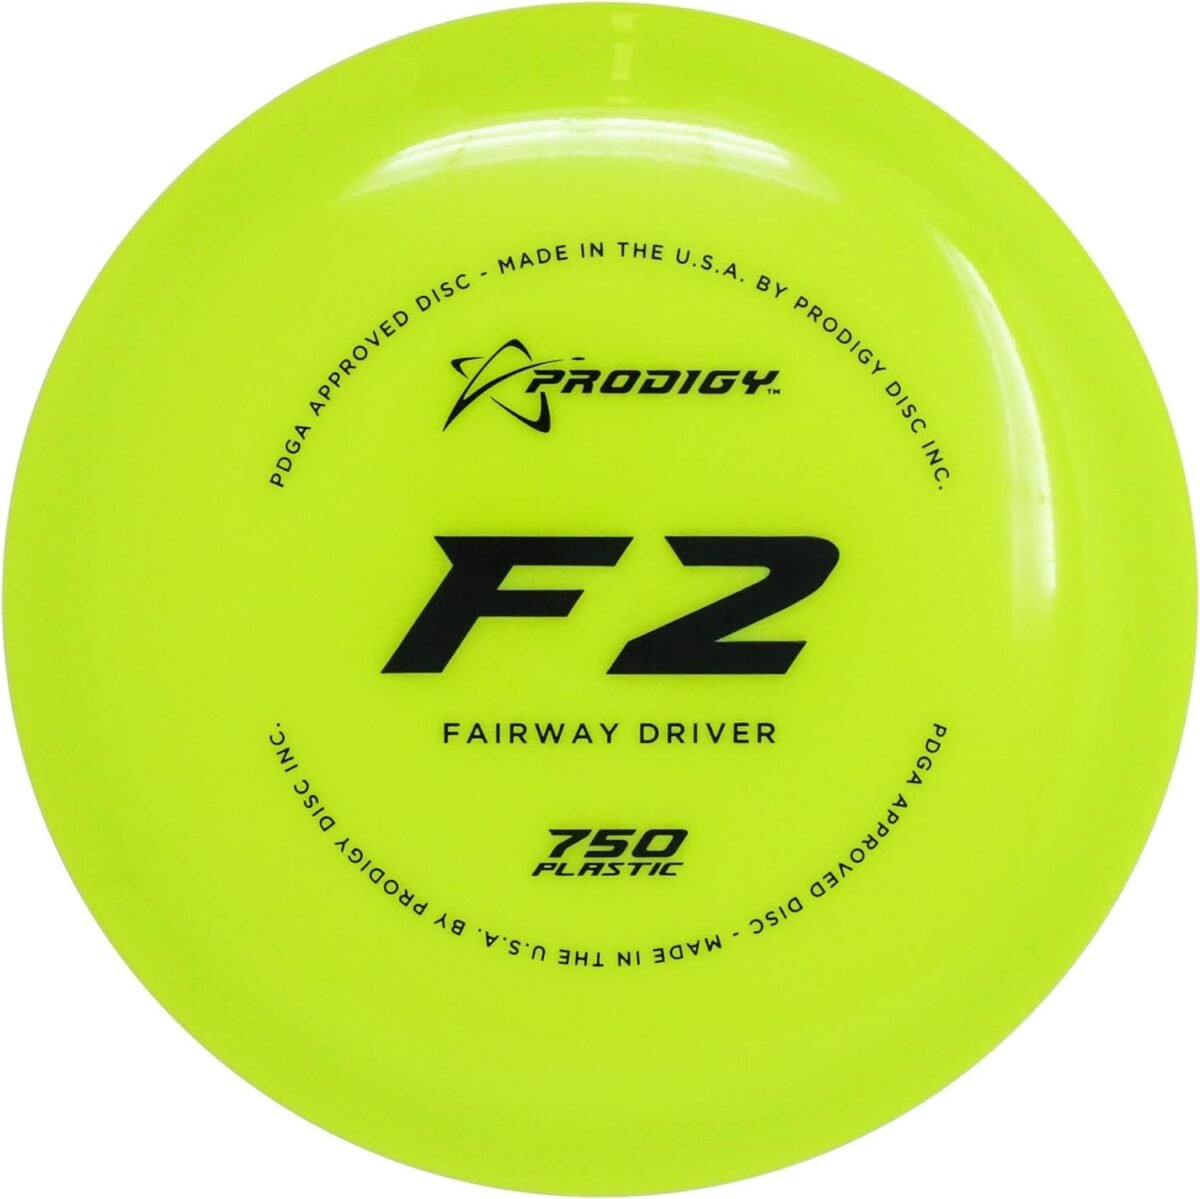 Comparing 5 Fairway Driver Golf Discs: Millennium, Discraft, Prodigy, Innova, and More!